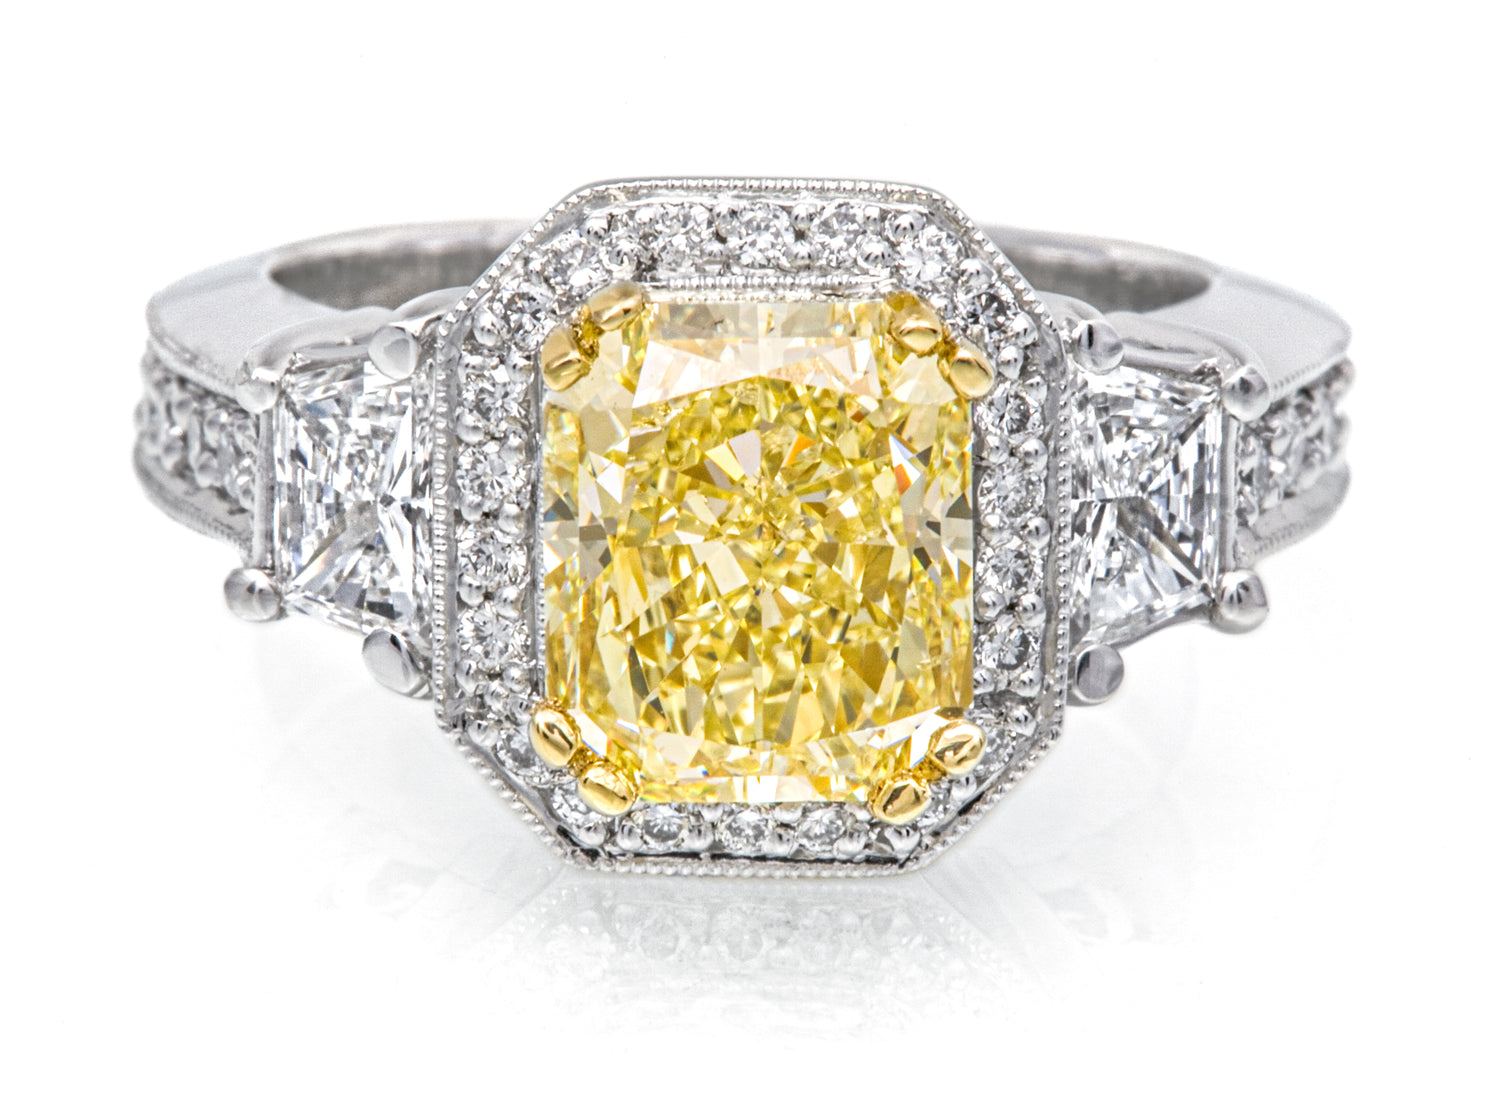 Custom canary diamond ring design by Ron George.